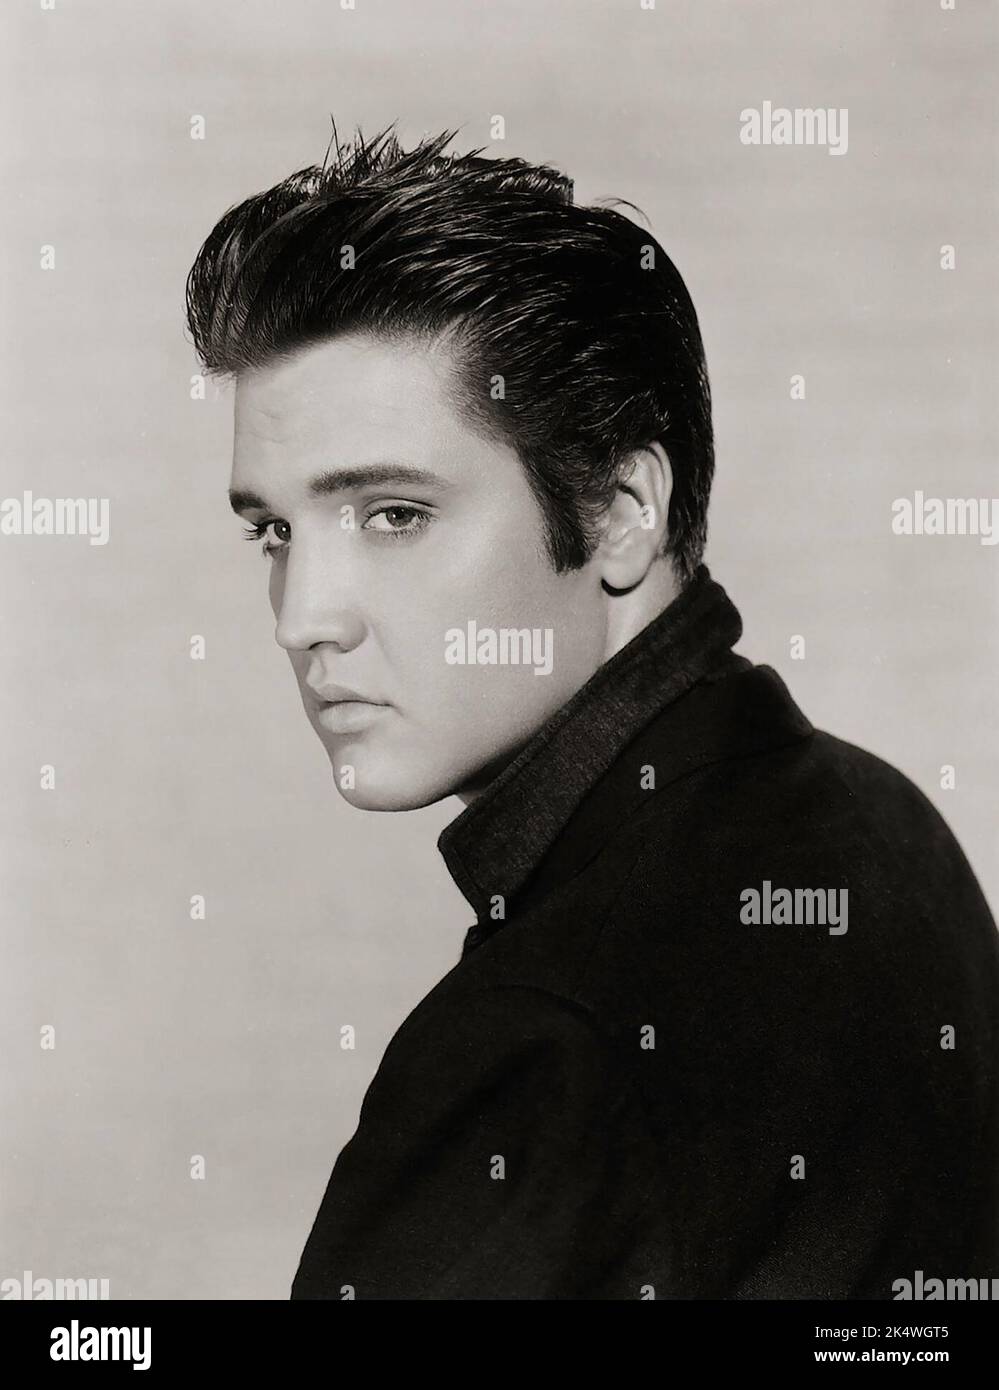 Elvis Presley portrait - Jailhouse Rock (MGM, 1957). Publicity Still. Stock Photo